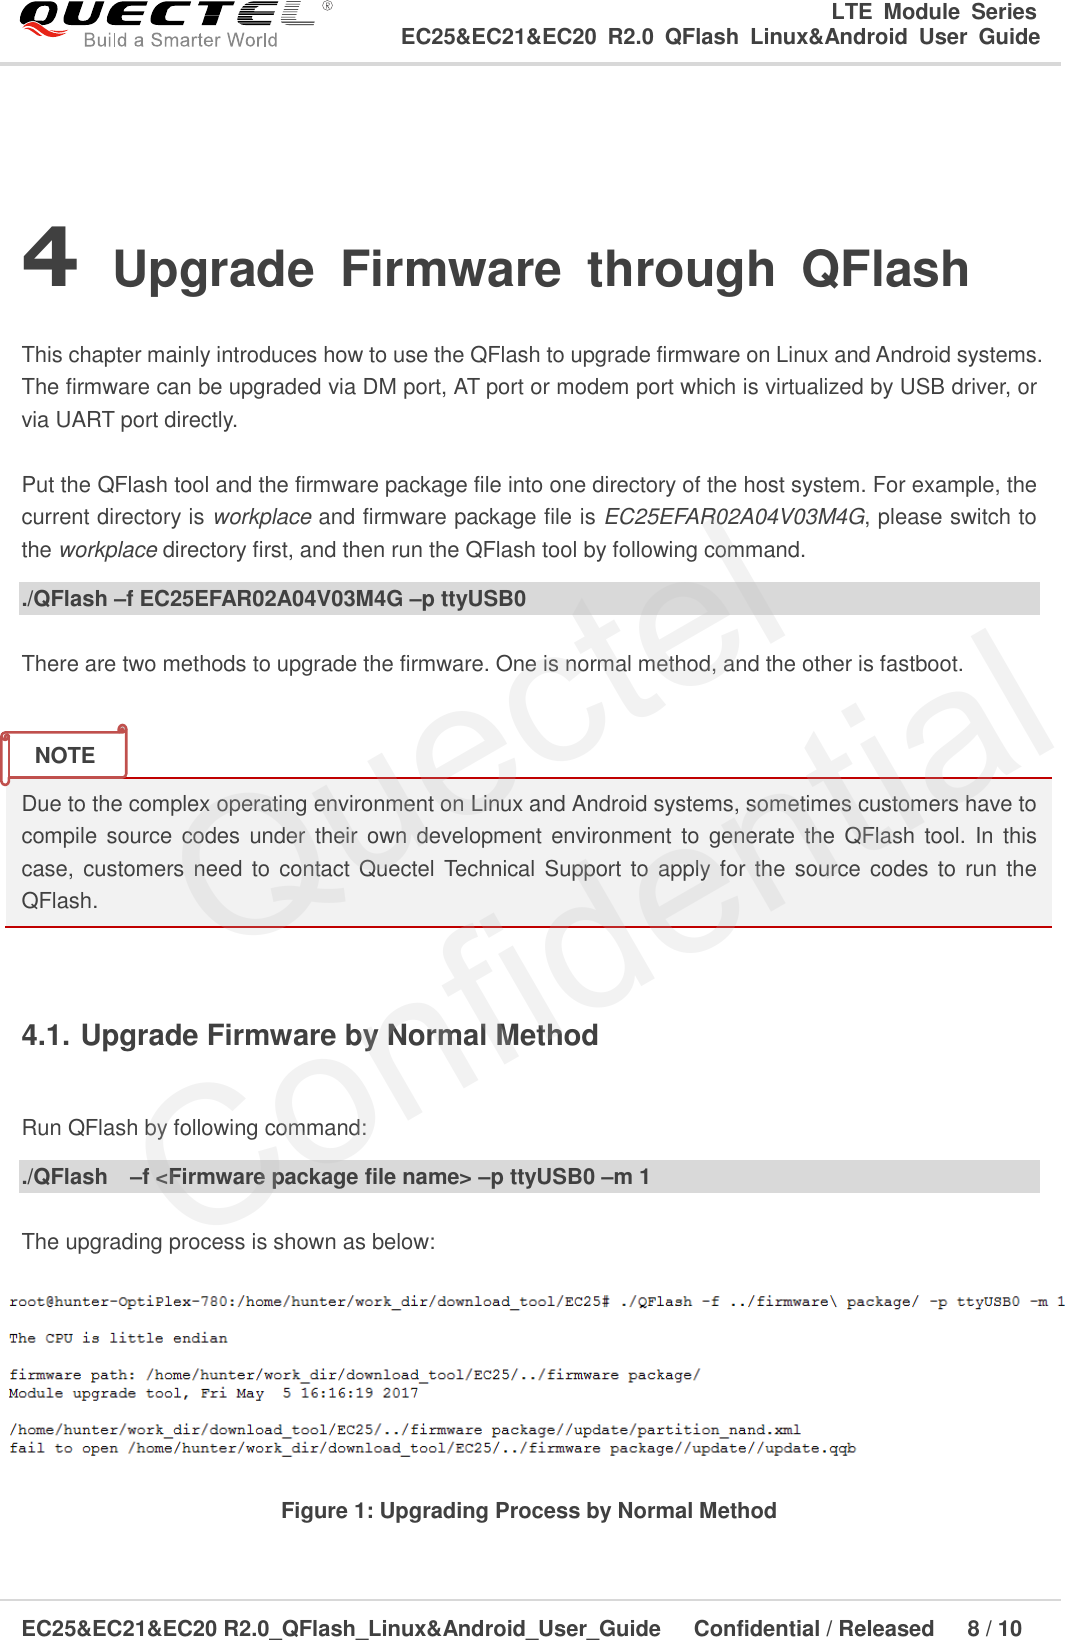 Page 9 of 11 - Quectel EC25&EC21&EC20 R2.0 QFlash Linux&Android User Guide V1.0